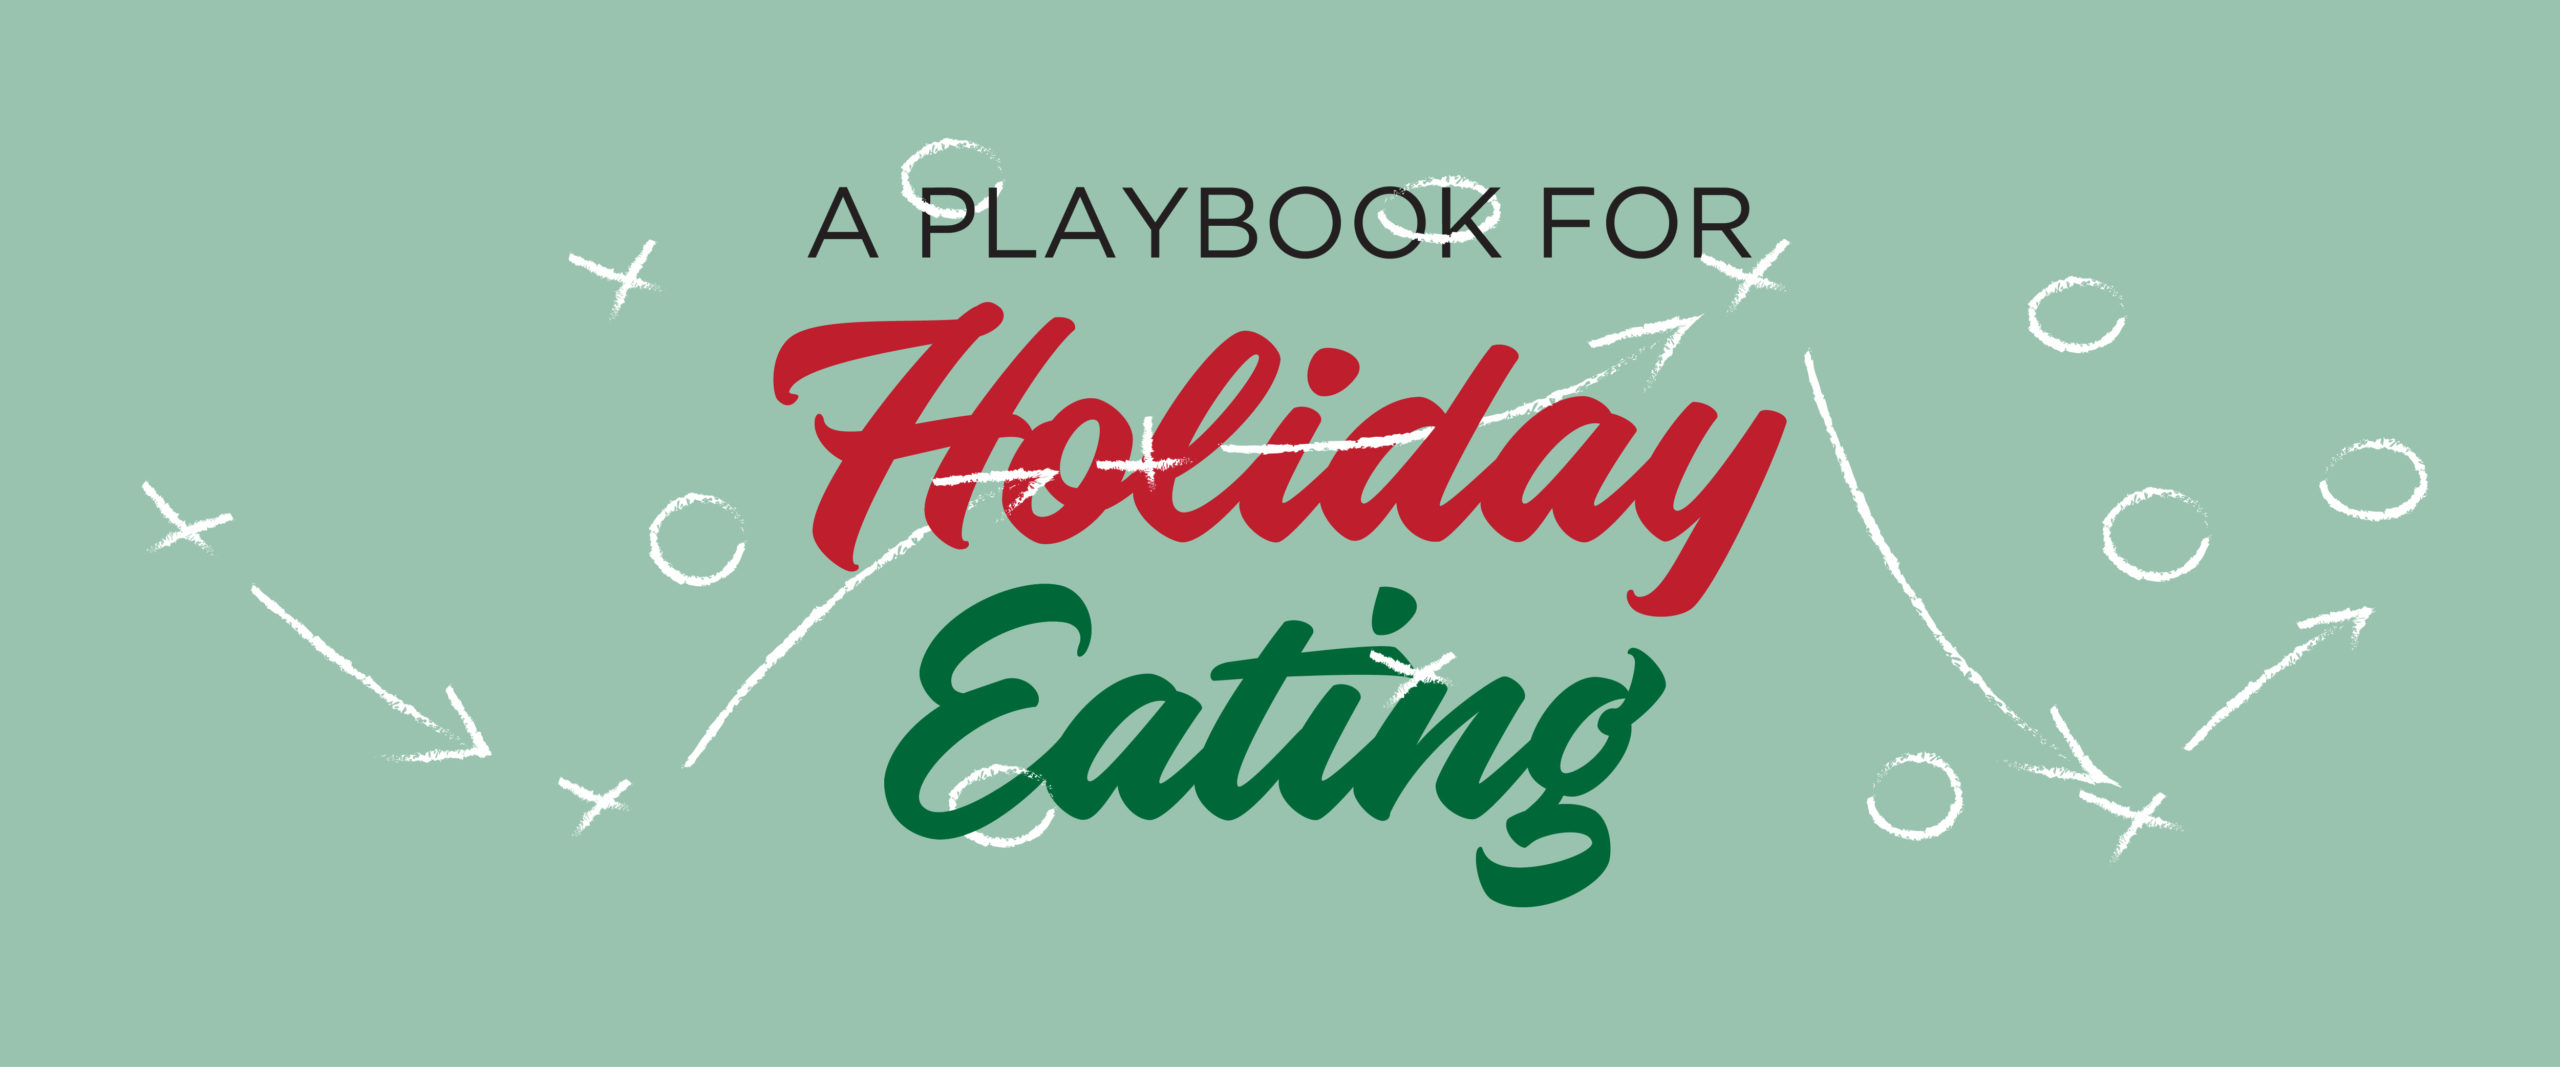 Holiday Eating Playbook blog